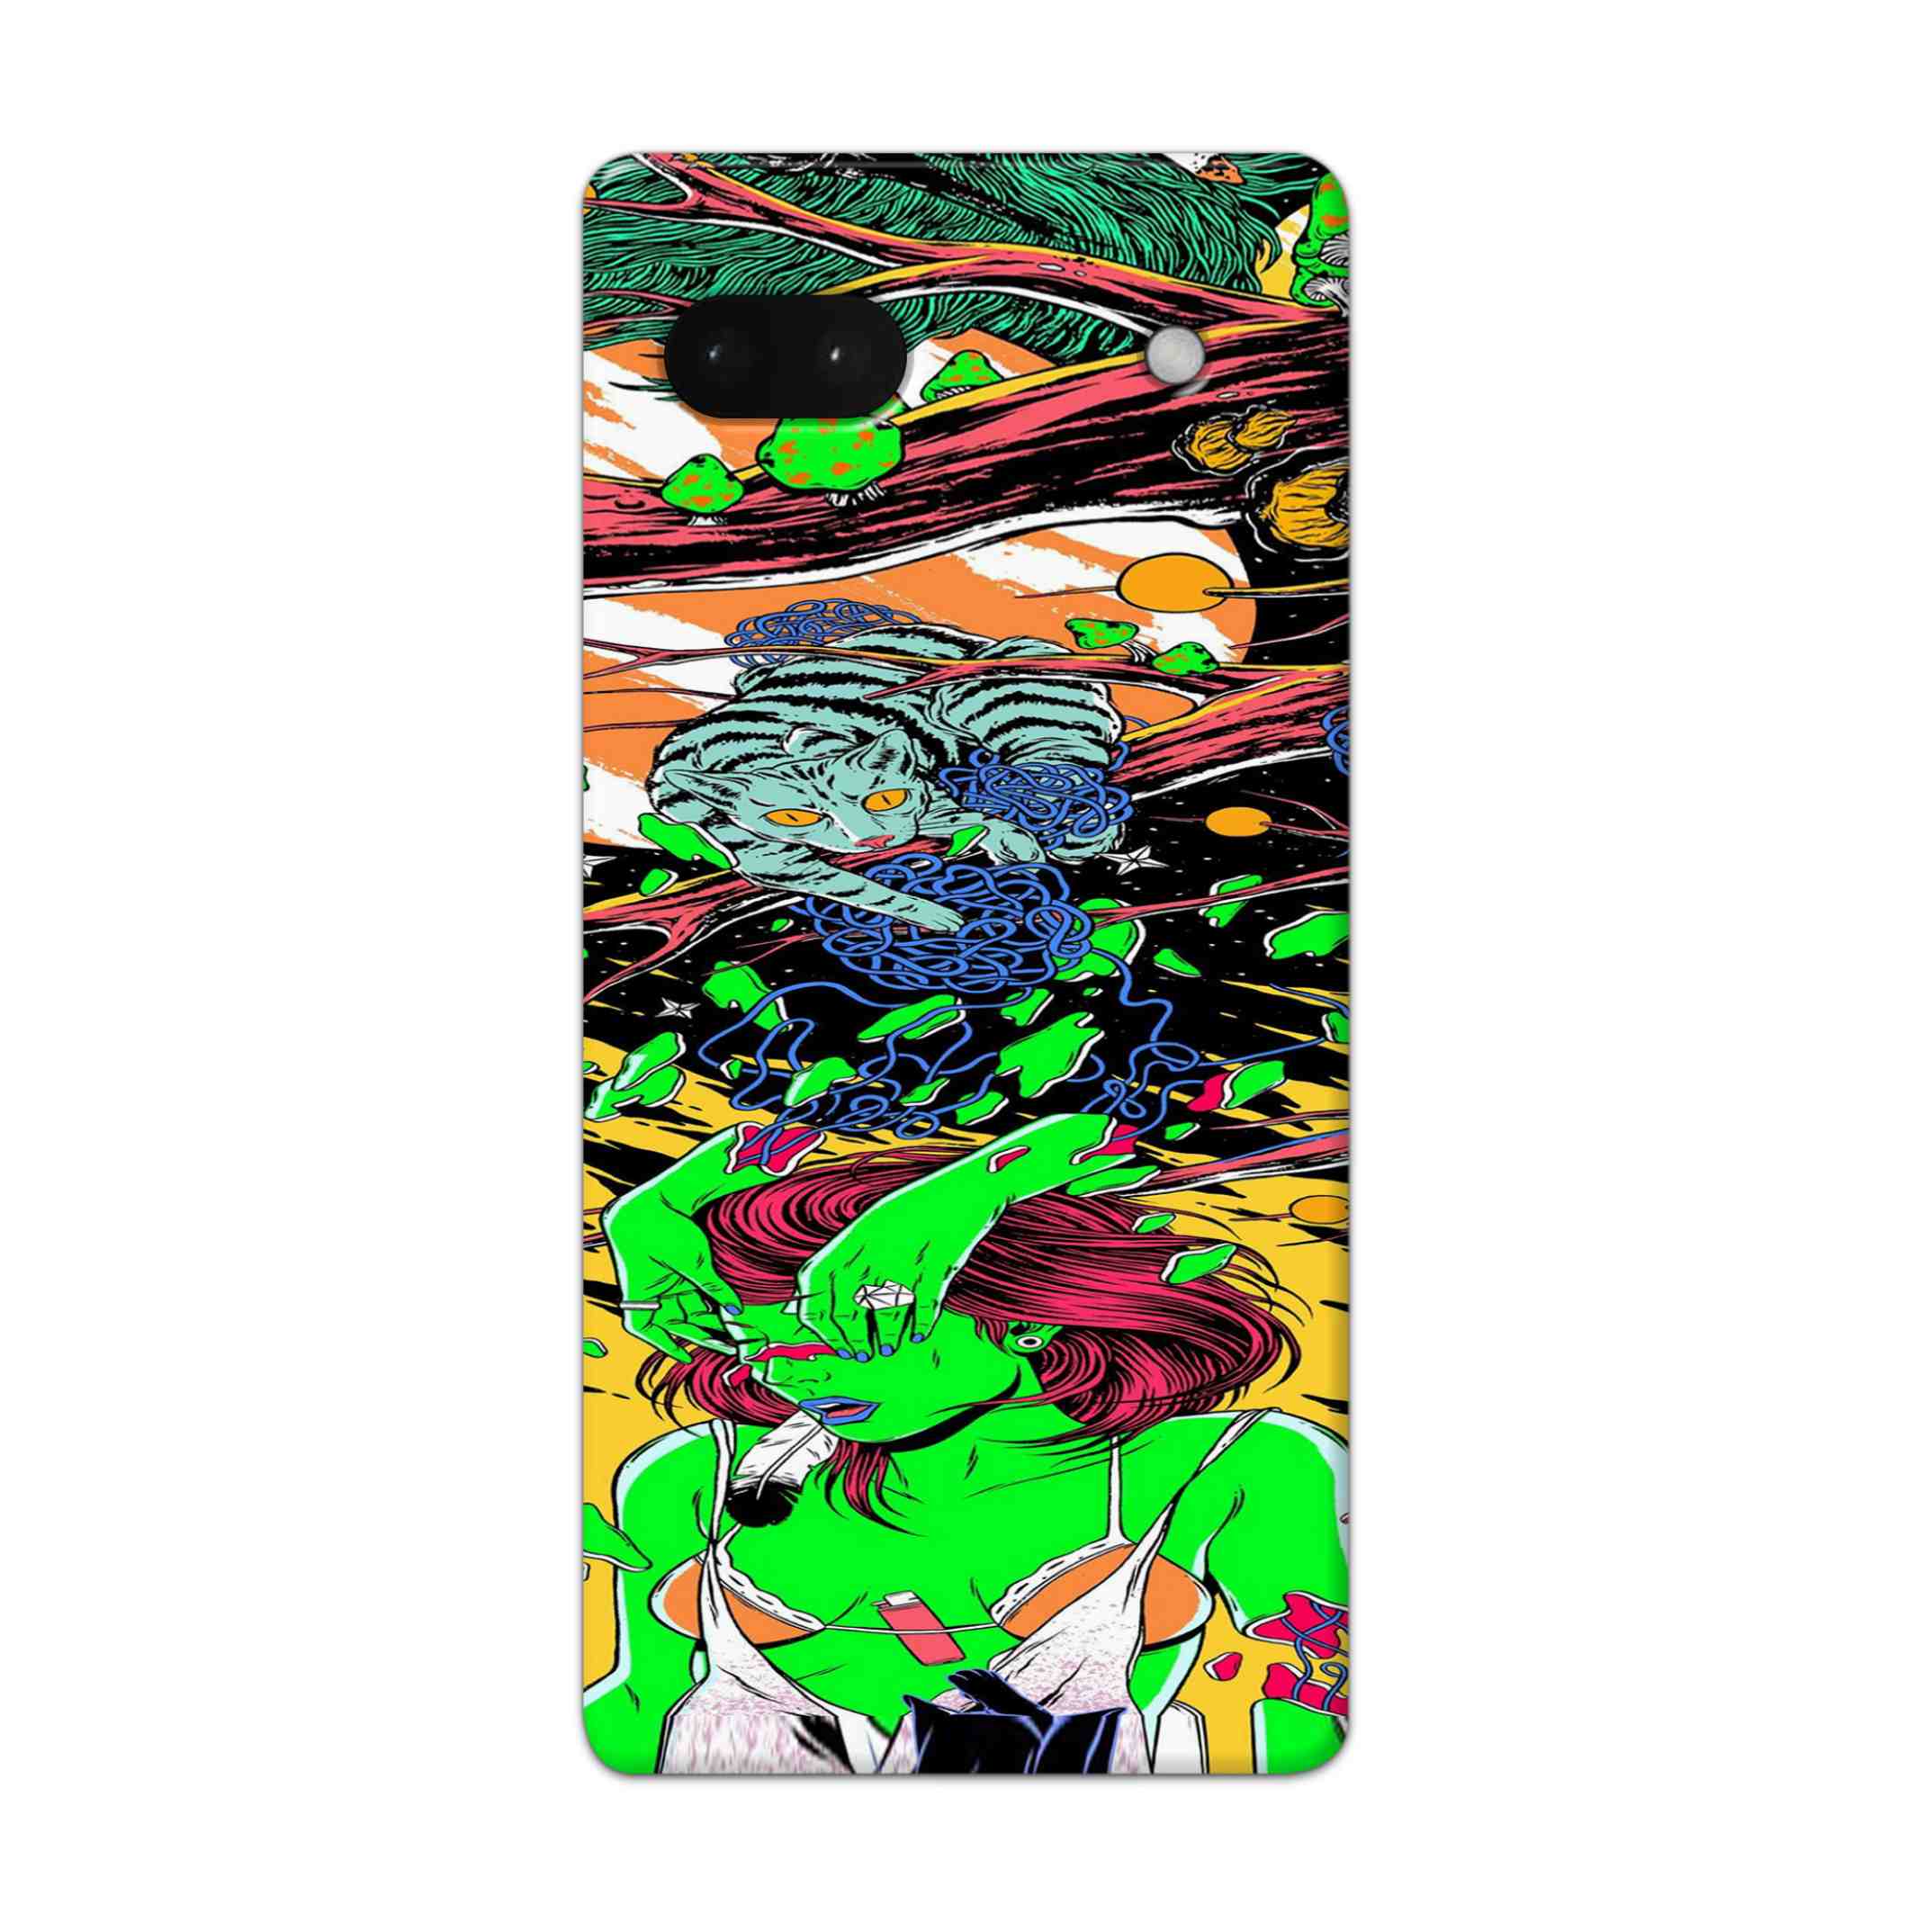 Buy Green Girl Art Hard Back Mobile Phone Case Cover For Google Pixel 6a Online